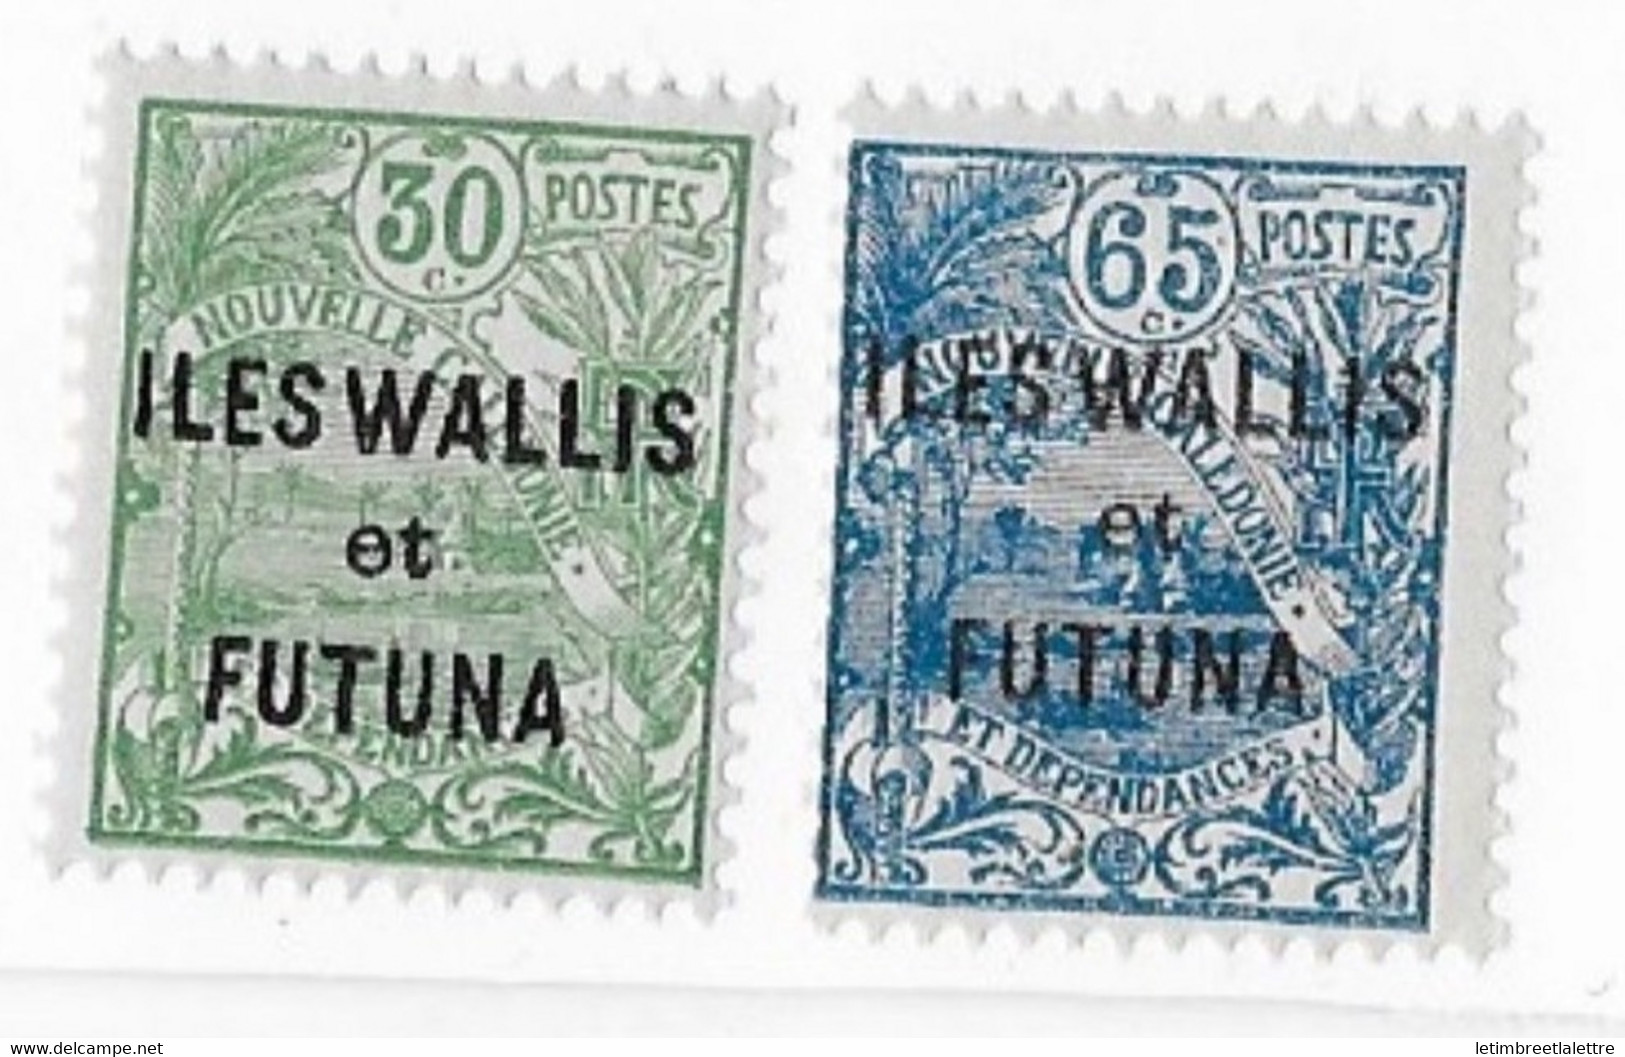 ⭐ Wallis Et Futuna - YT N° 40 Et 41 ** - Neuf Sans Charnière - 1927 / 1928 ⭐ - Ongebruikt